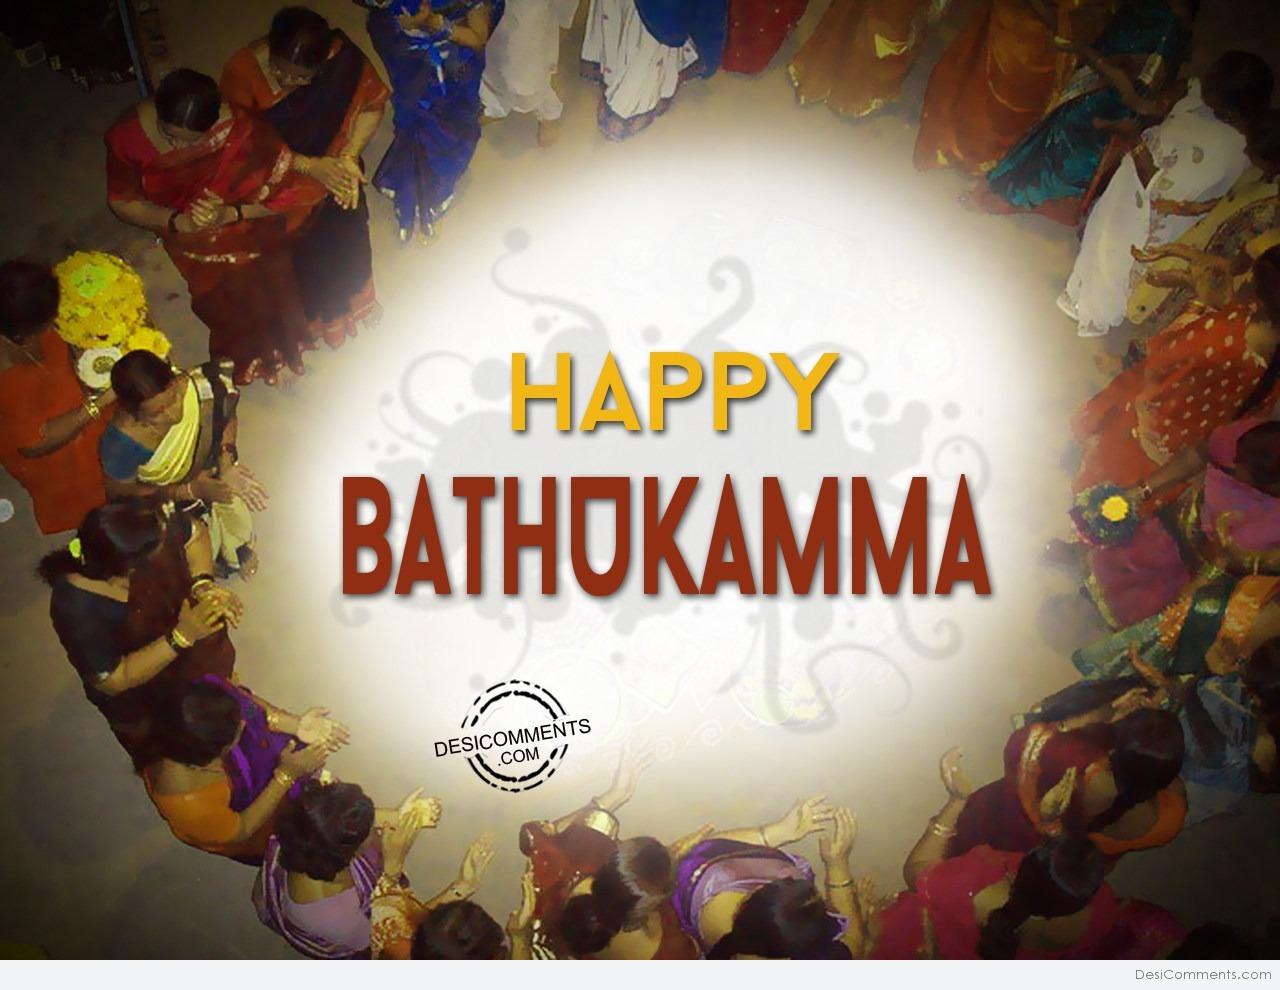 10+ Bathukamma Images, Pictures, Photos